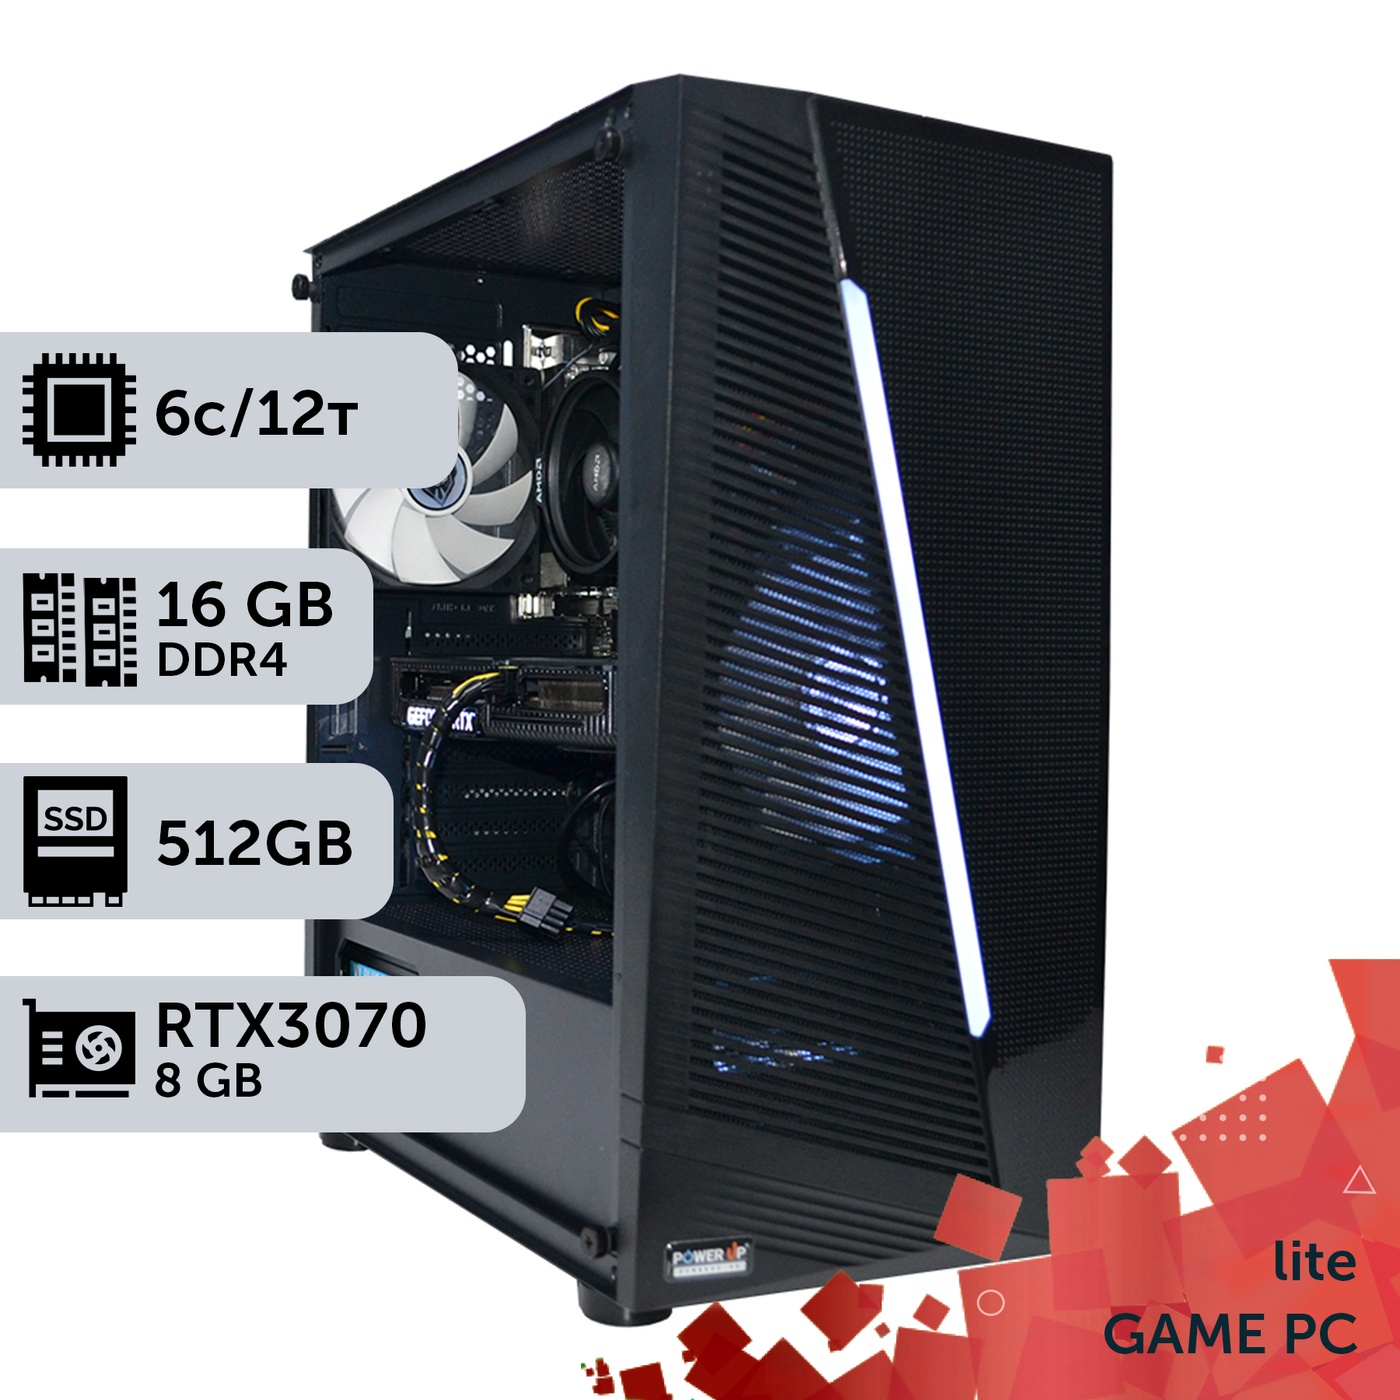 Игровой компьютер GamePC Lite #144 Core i3 12100F/16 GB/HDD 1 TB/SSD 512GB/GeForce RTX 3070 8GB